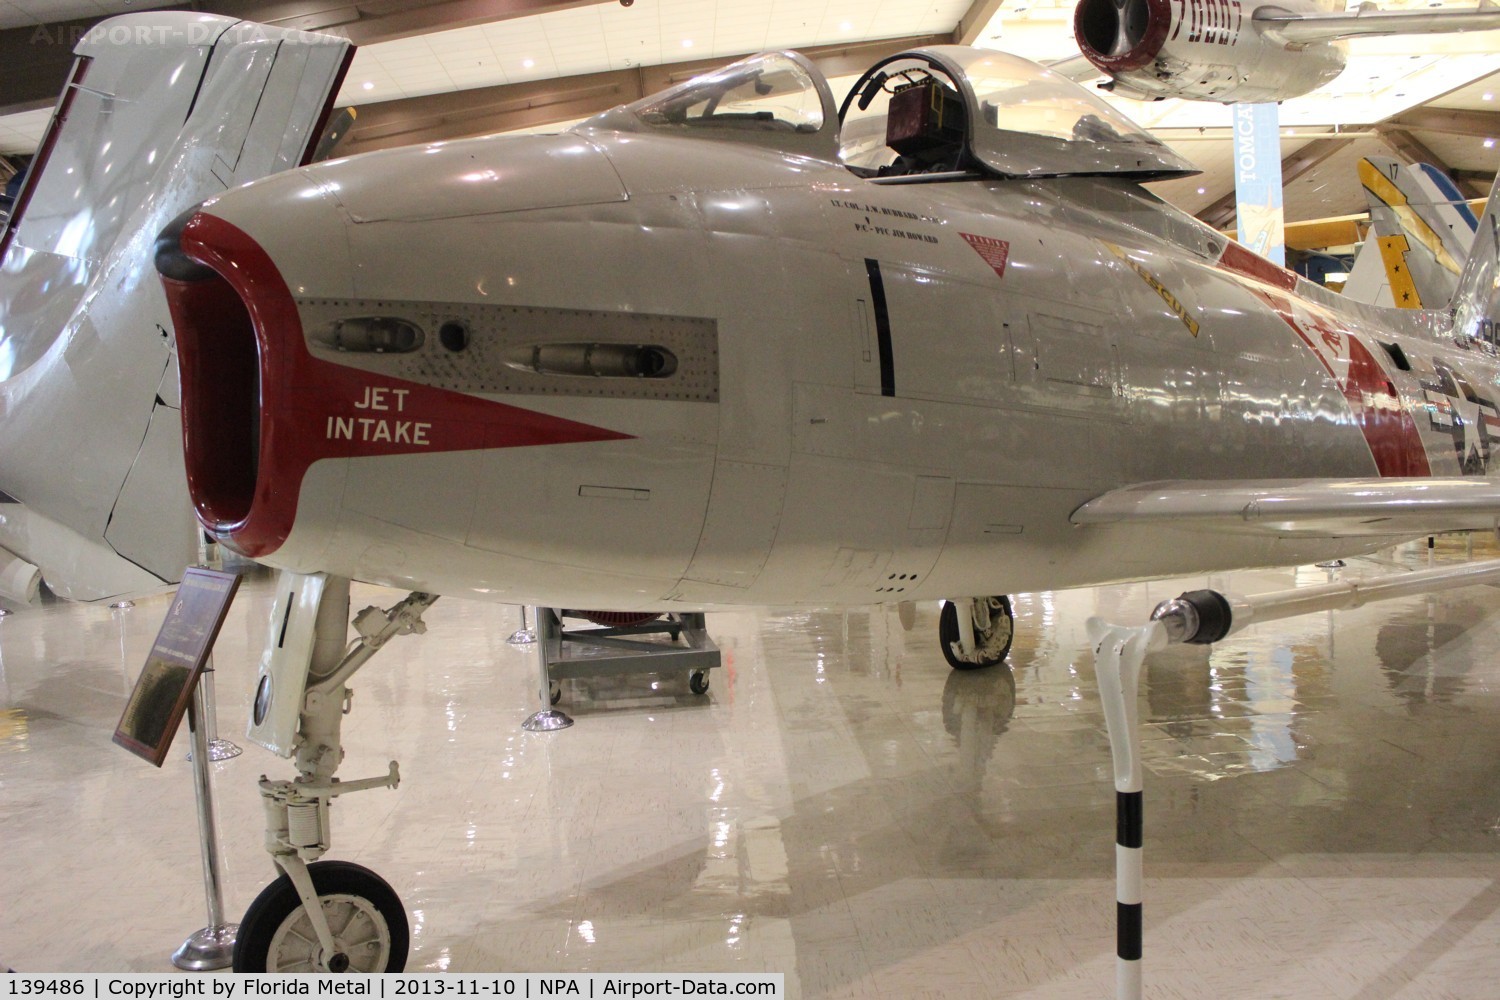 139486, 1957 North American FJ-4 Fury C/N 209-106, FJ-4 Fury